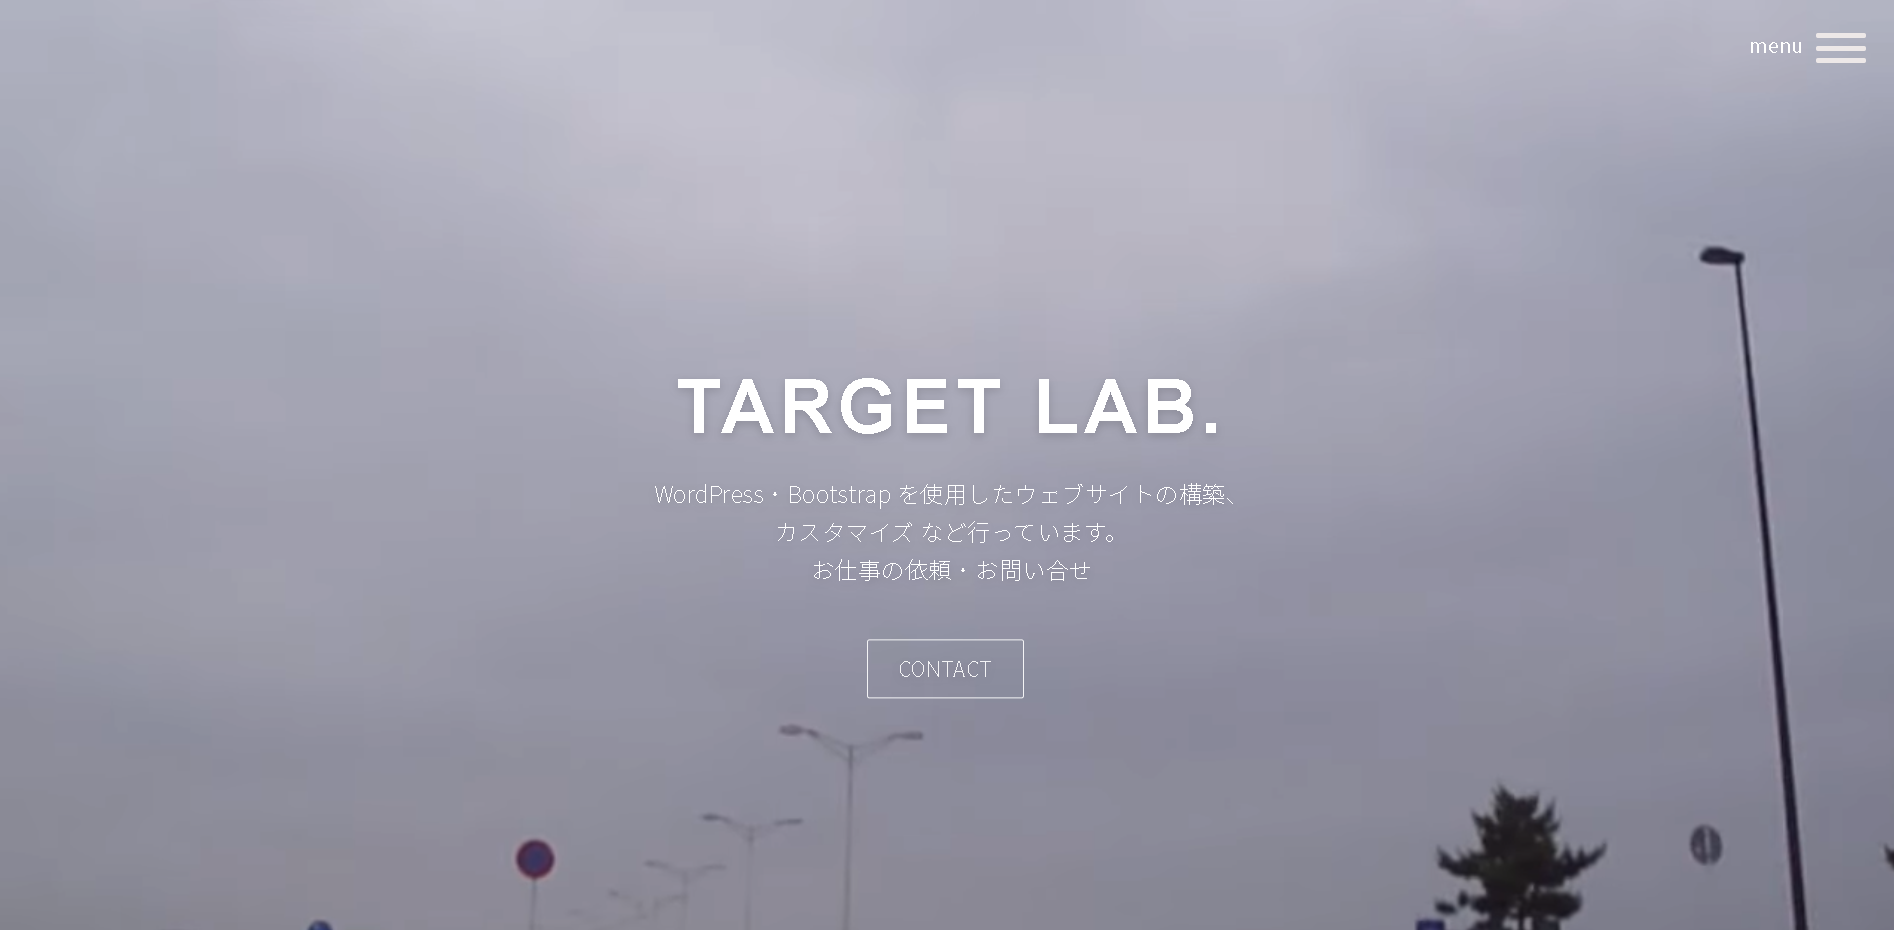 Target-Lab.のTarget-Lab.サービス